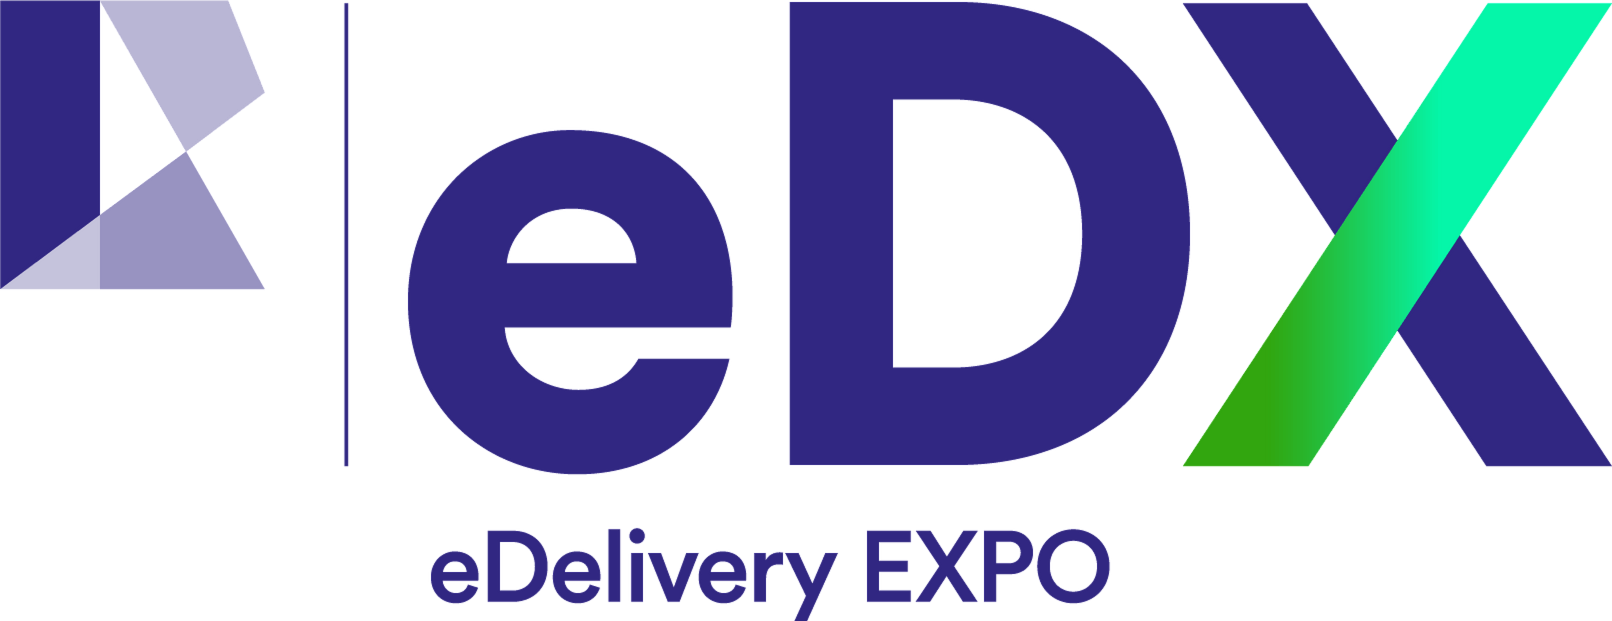 NEC Logo - eDX 2019 - driving innovation in retail distribution, warehousing ...